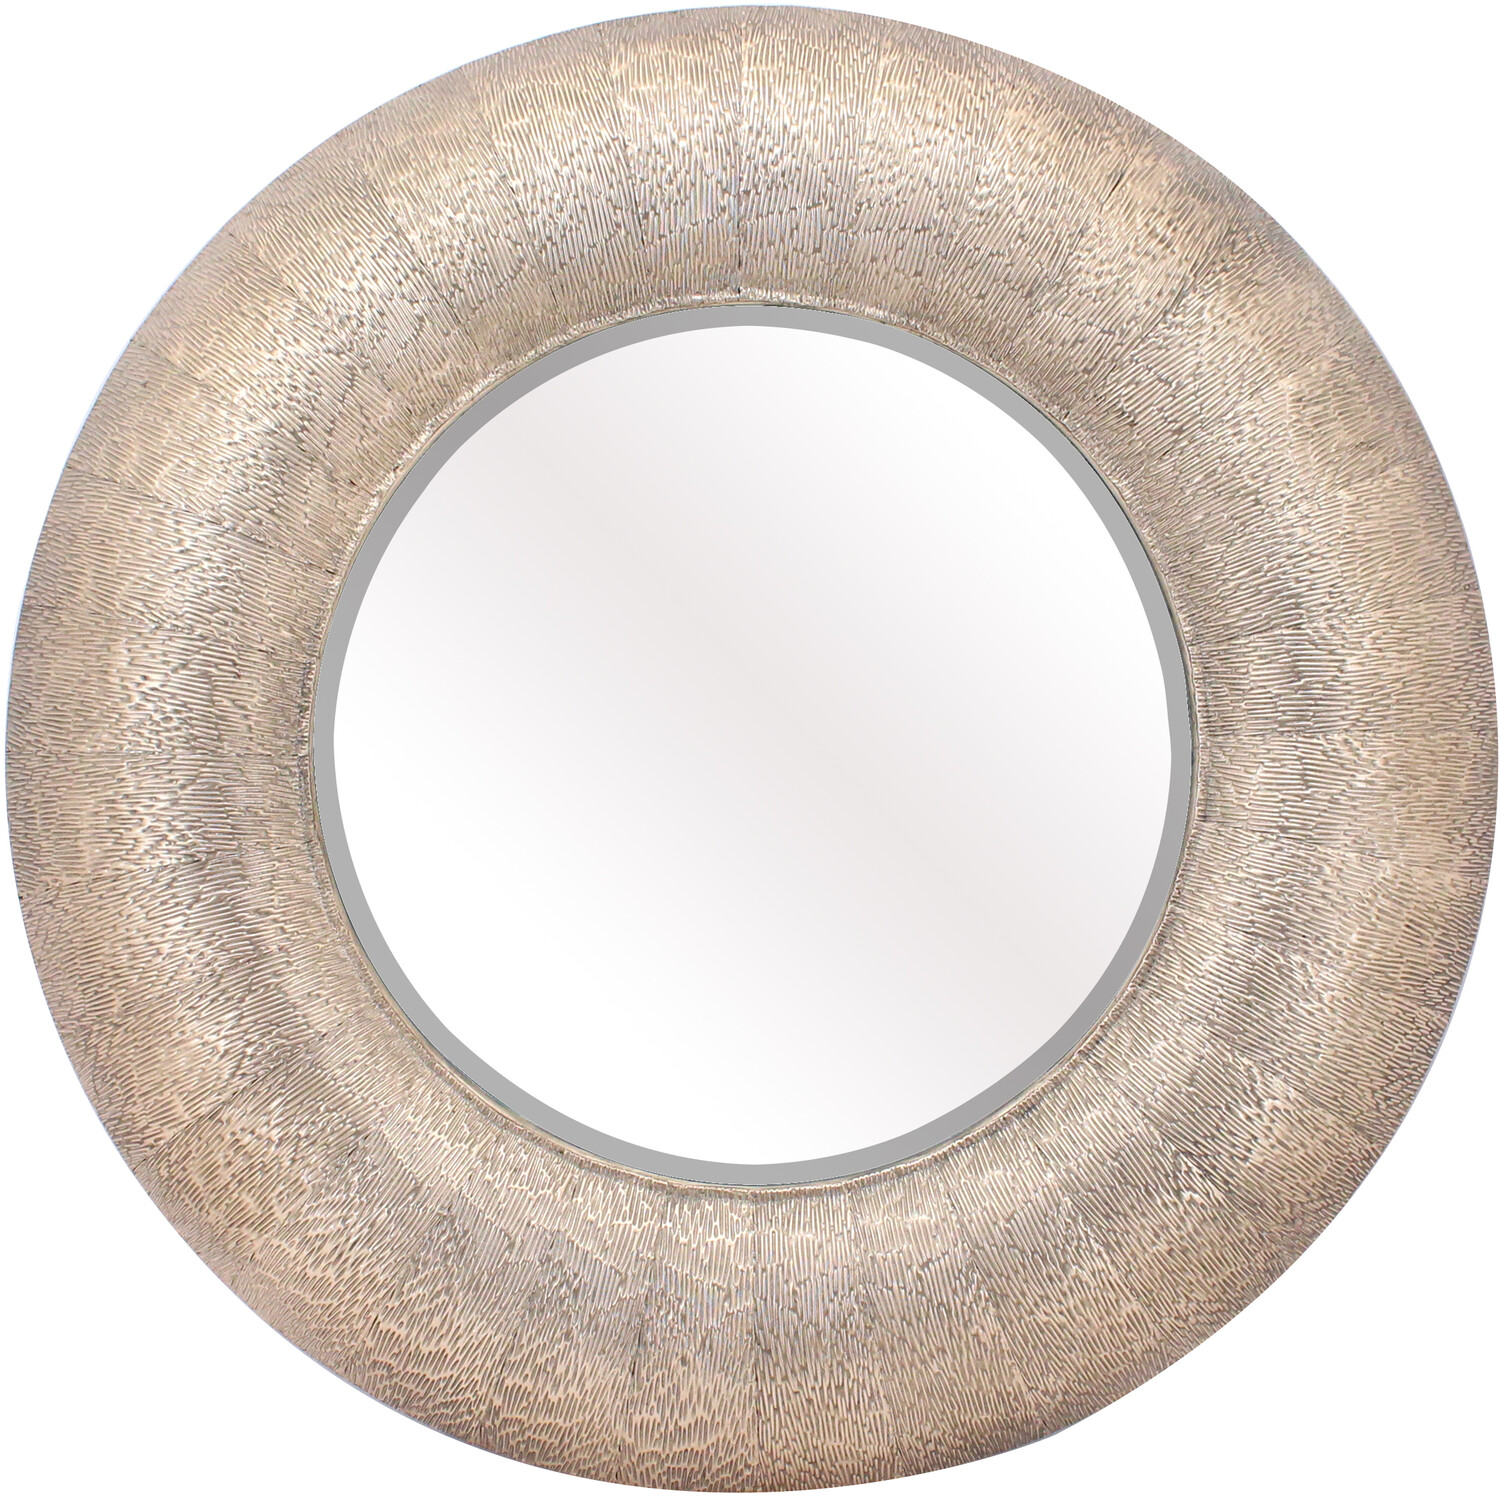 Azaria Metallic Round Ripple Mirror - Gold Image 1